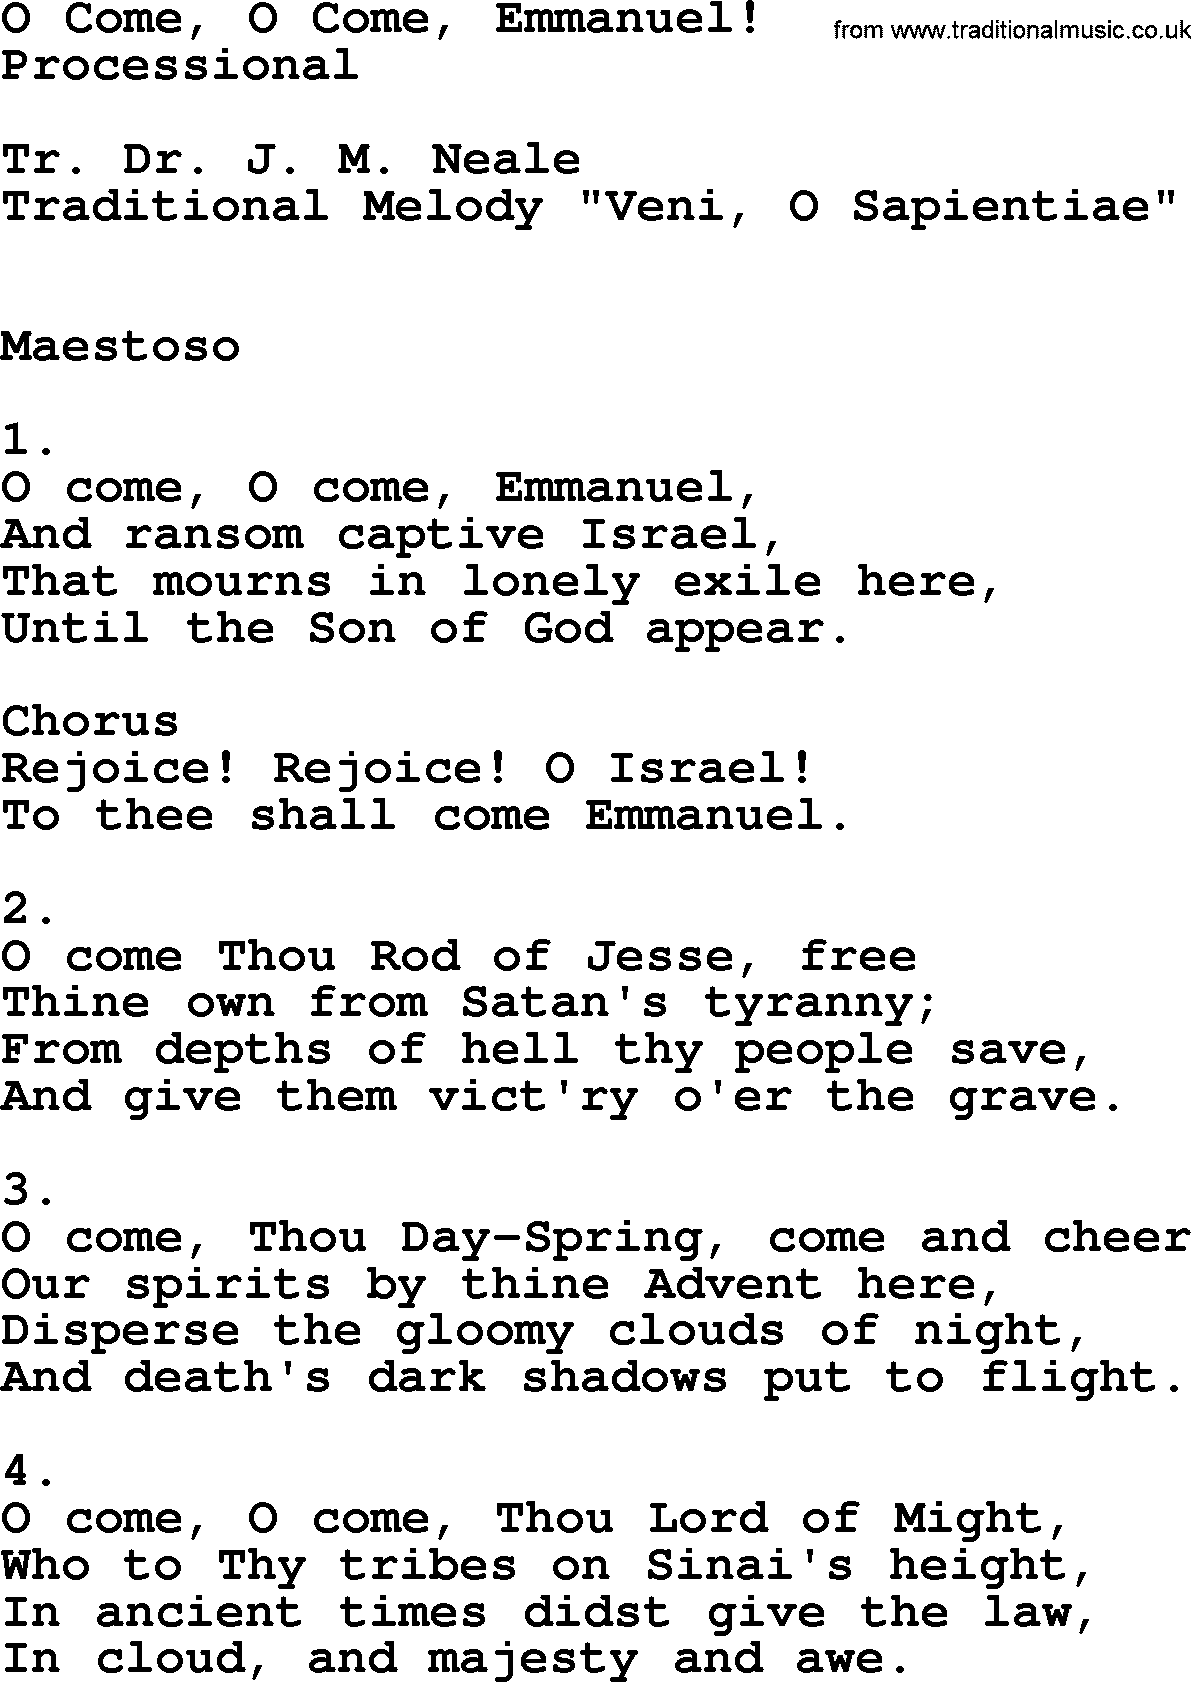 Catholic Hymn: O Come, O Come, Emmanuel! lyrics with PDF